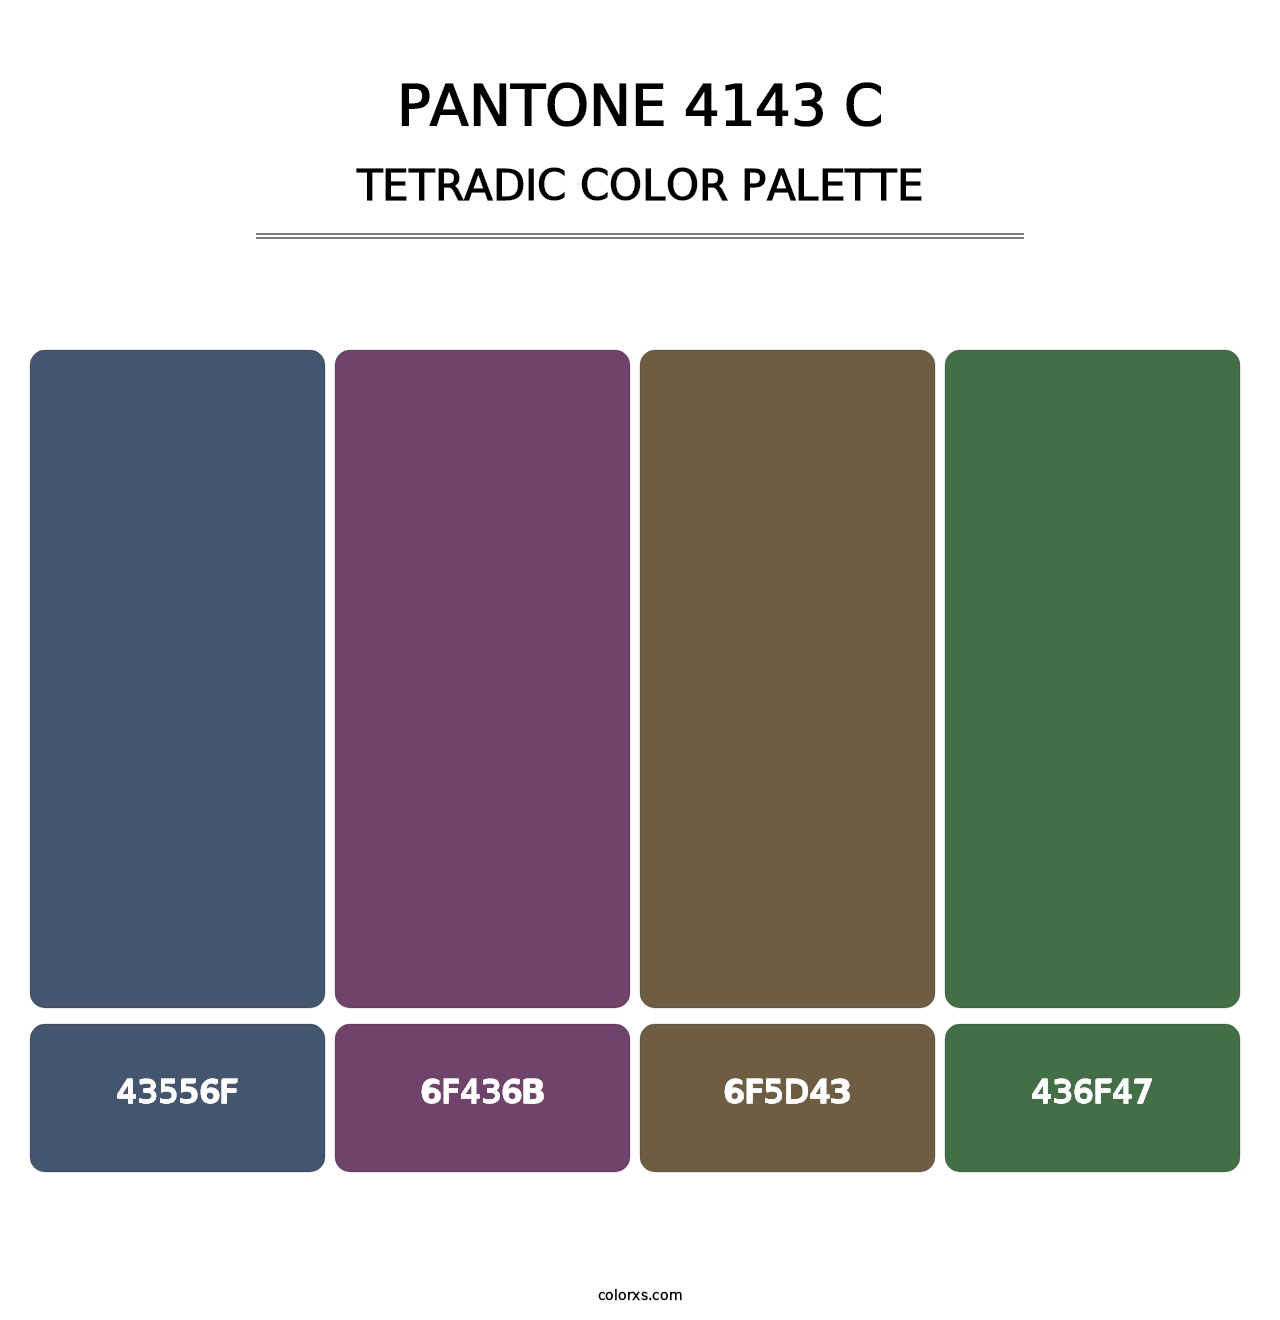 PANTONE 4143 C - Tetradic Color Palette